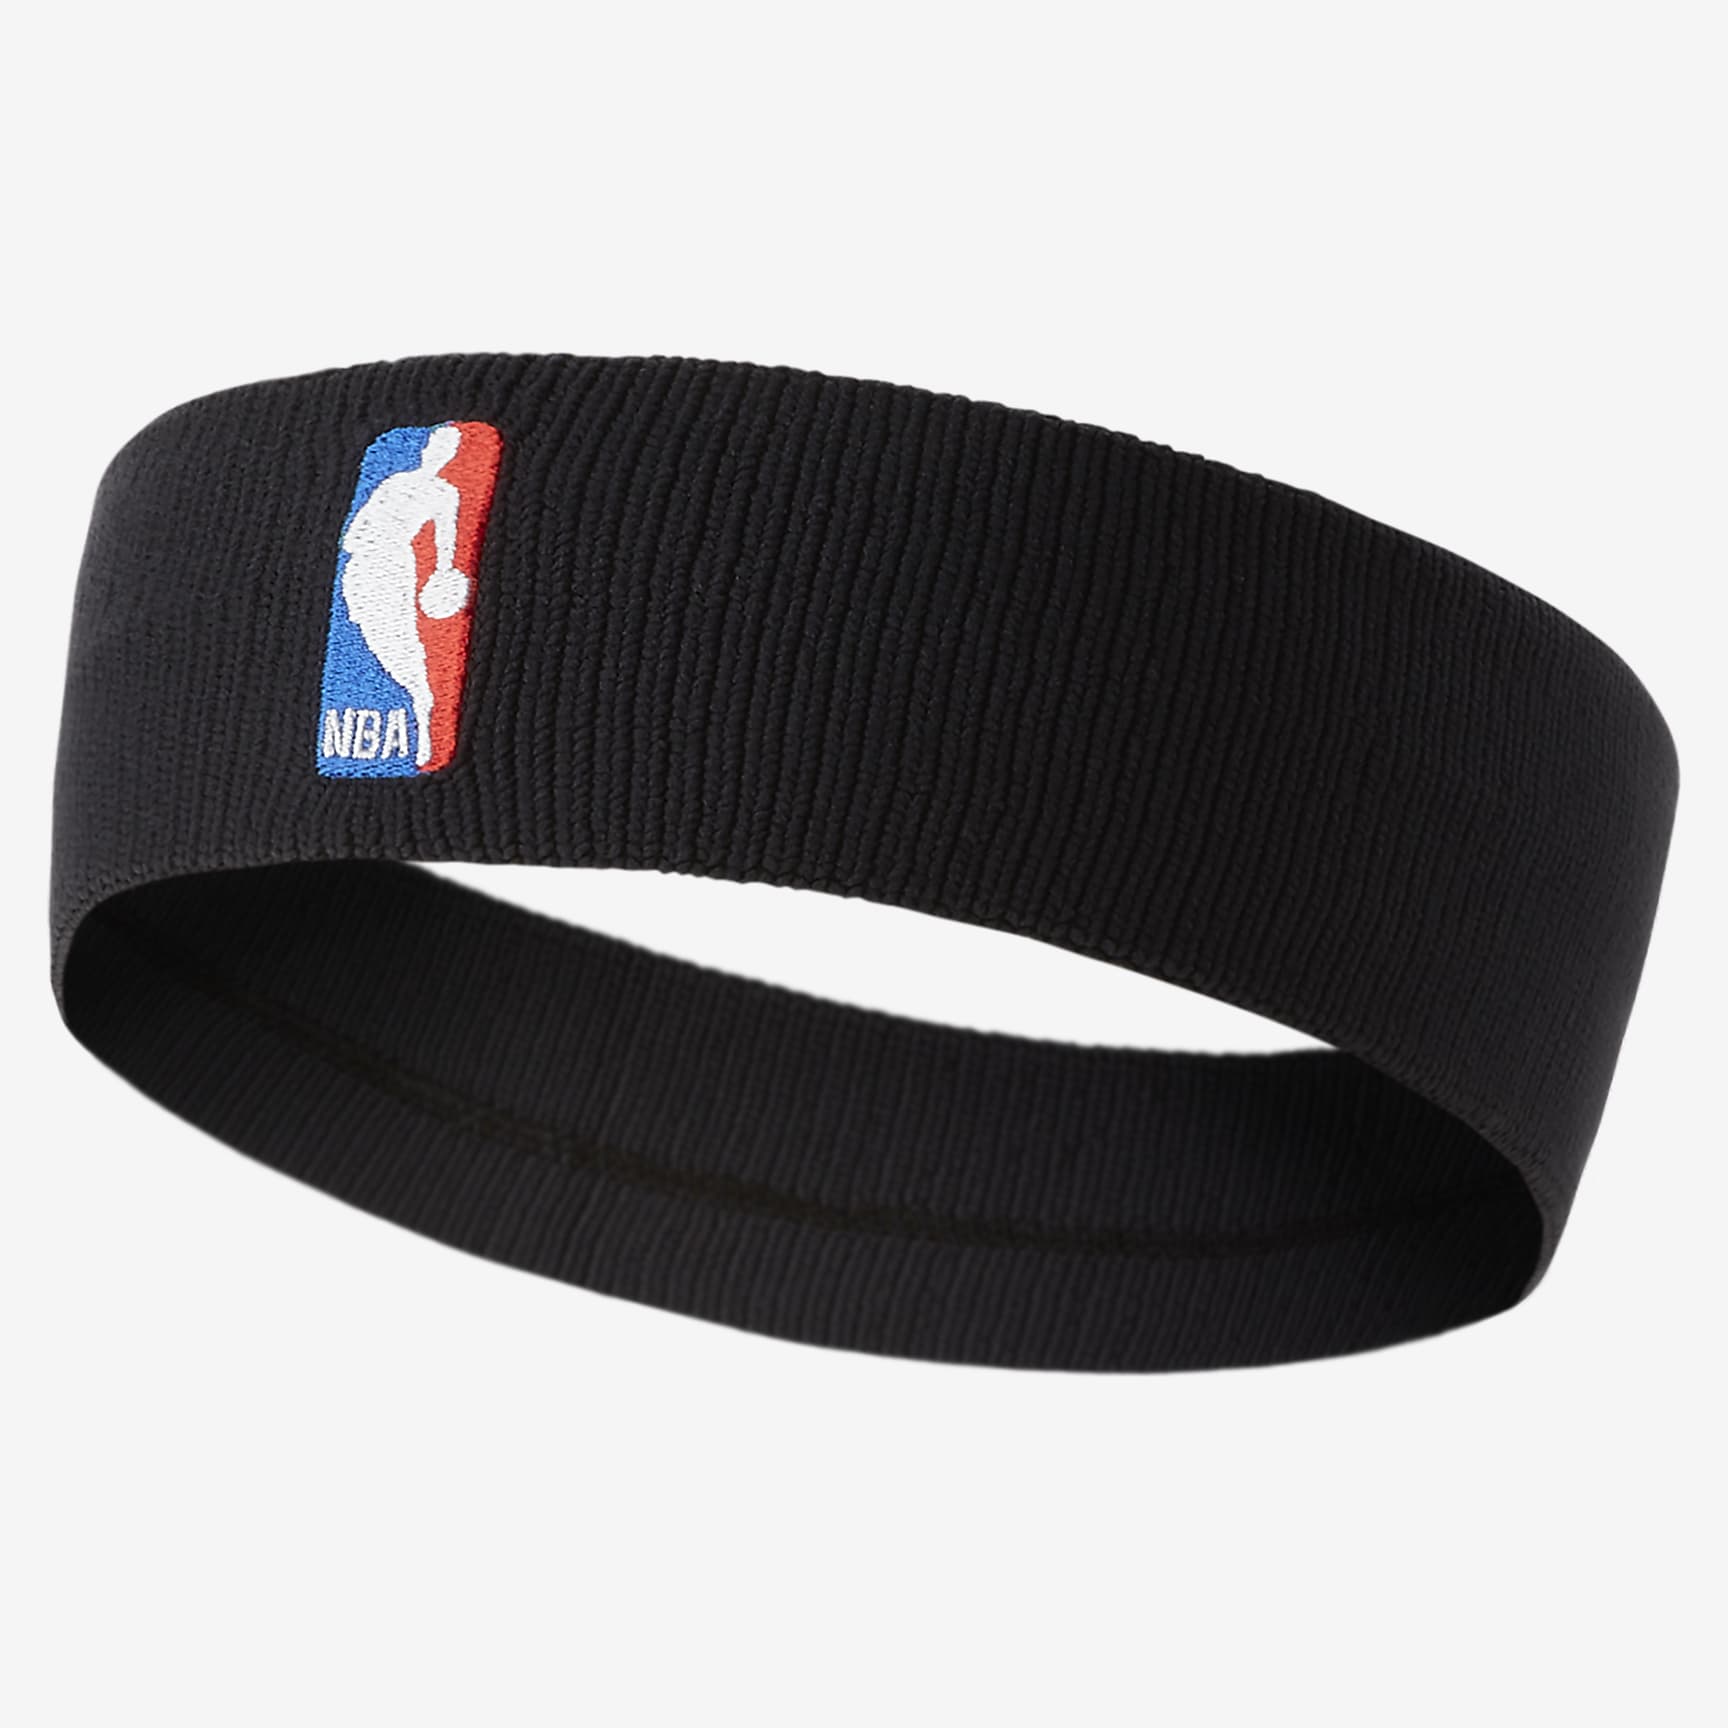 Pannband Nike NBA - Svart/Svart